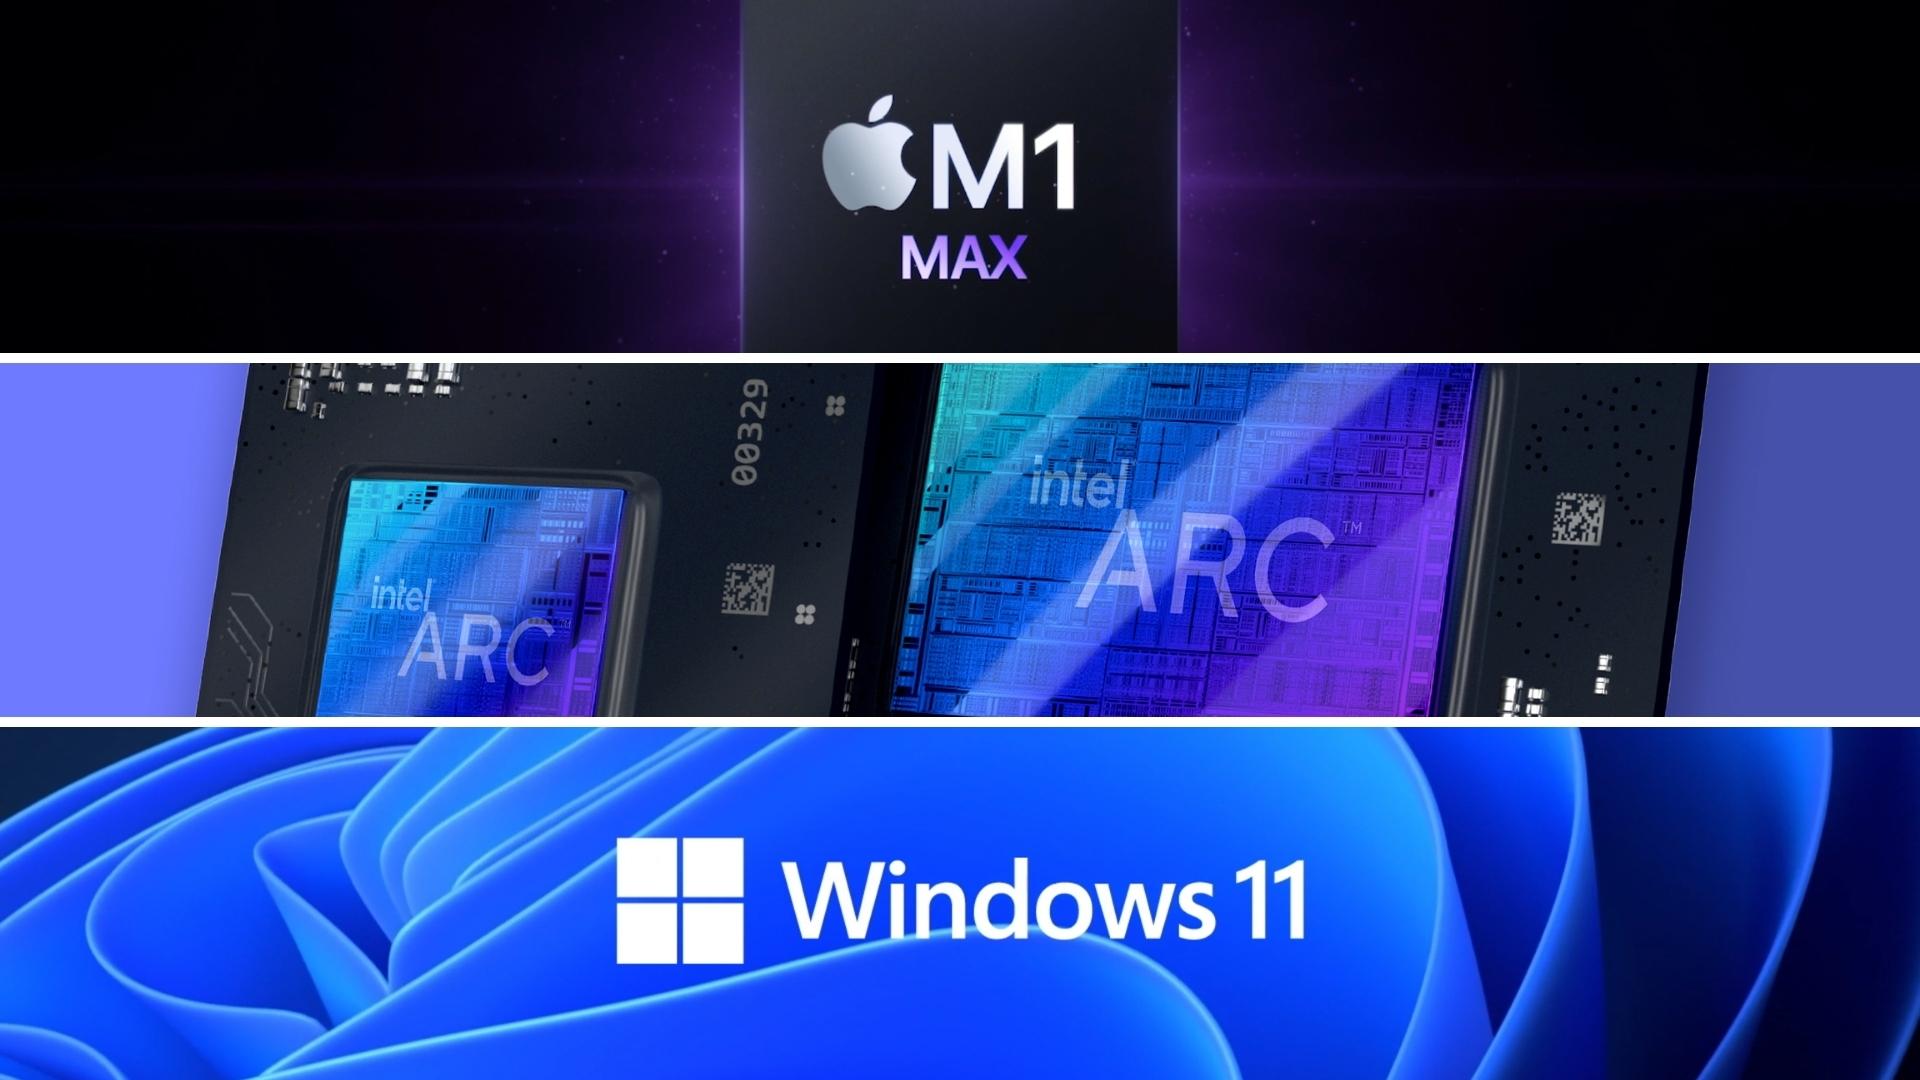 composite image show logos for Apple M1 Max, Intel Arc Alchemist and Windows 11